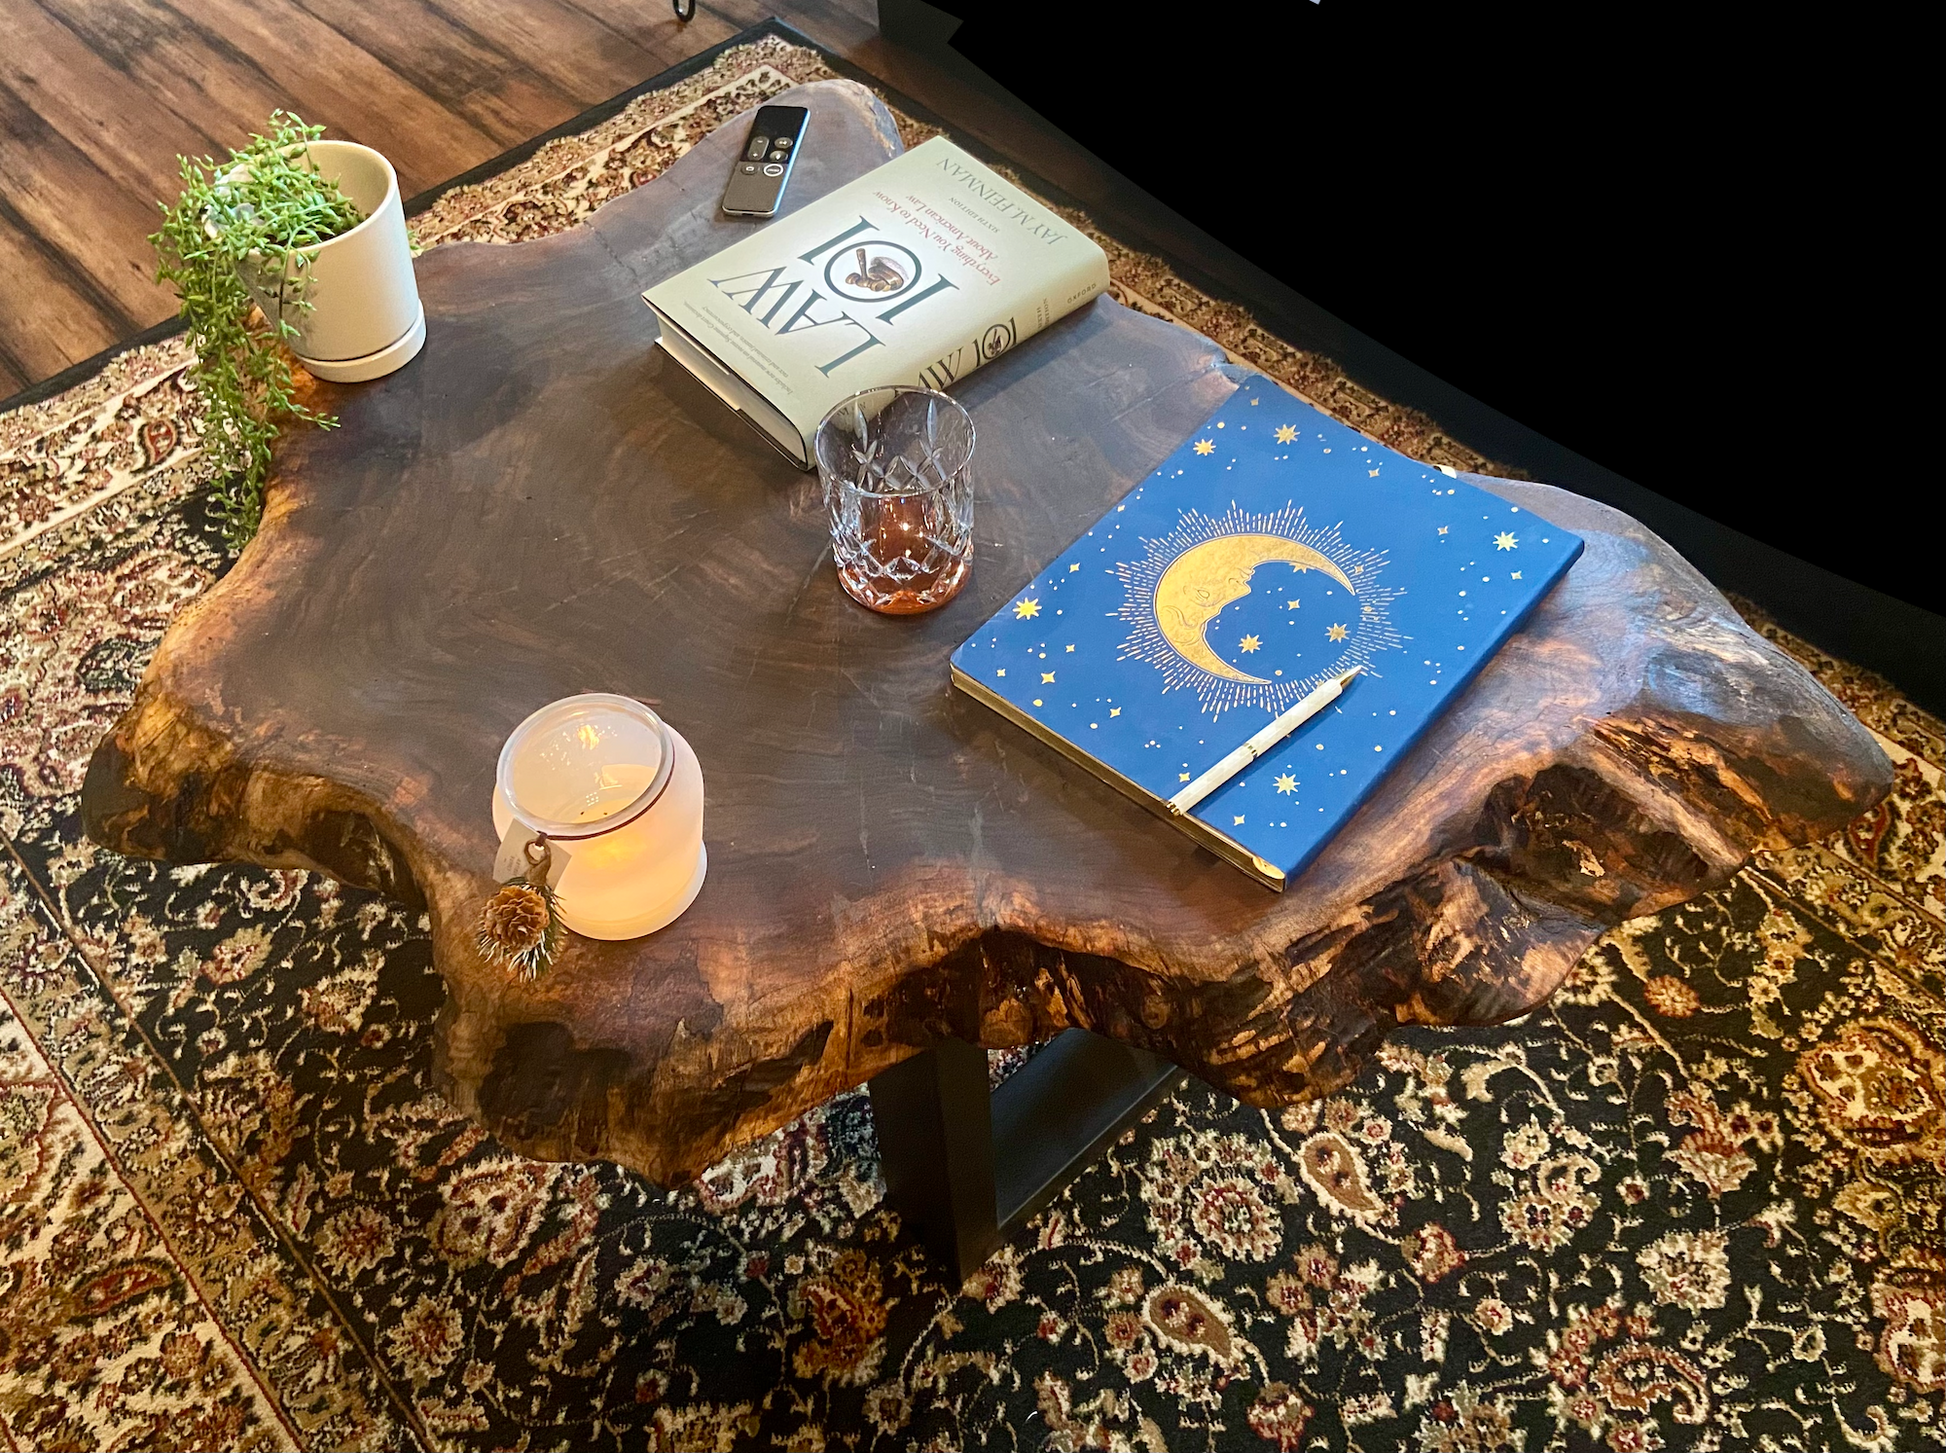 Live Edge Cross Cut Walnut Coffee Table|Live Edge Round Wood Coffee Table|Starburst Black Walnut Table|Live Edge Rustic Walnut Wafer Table